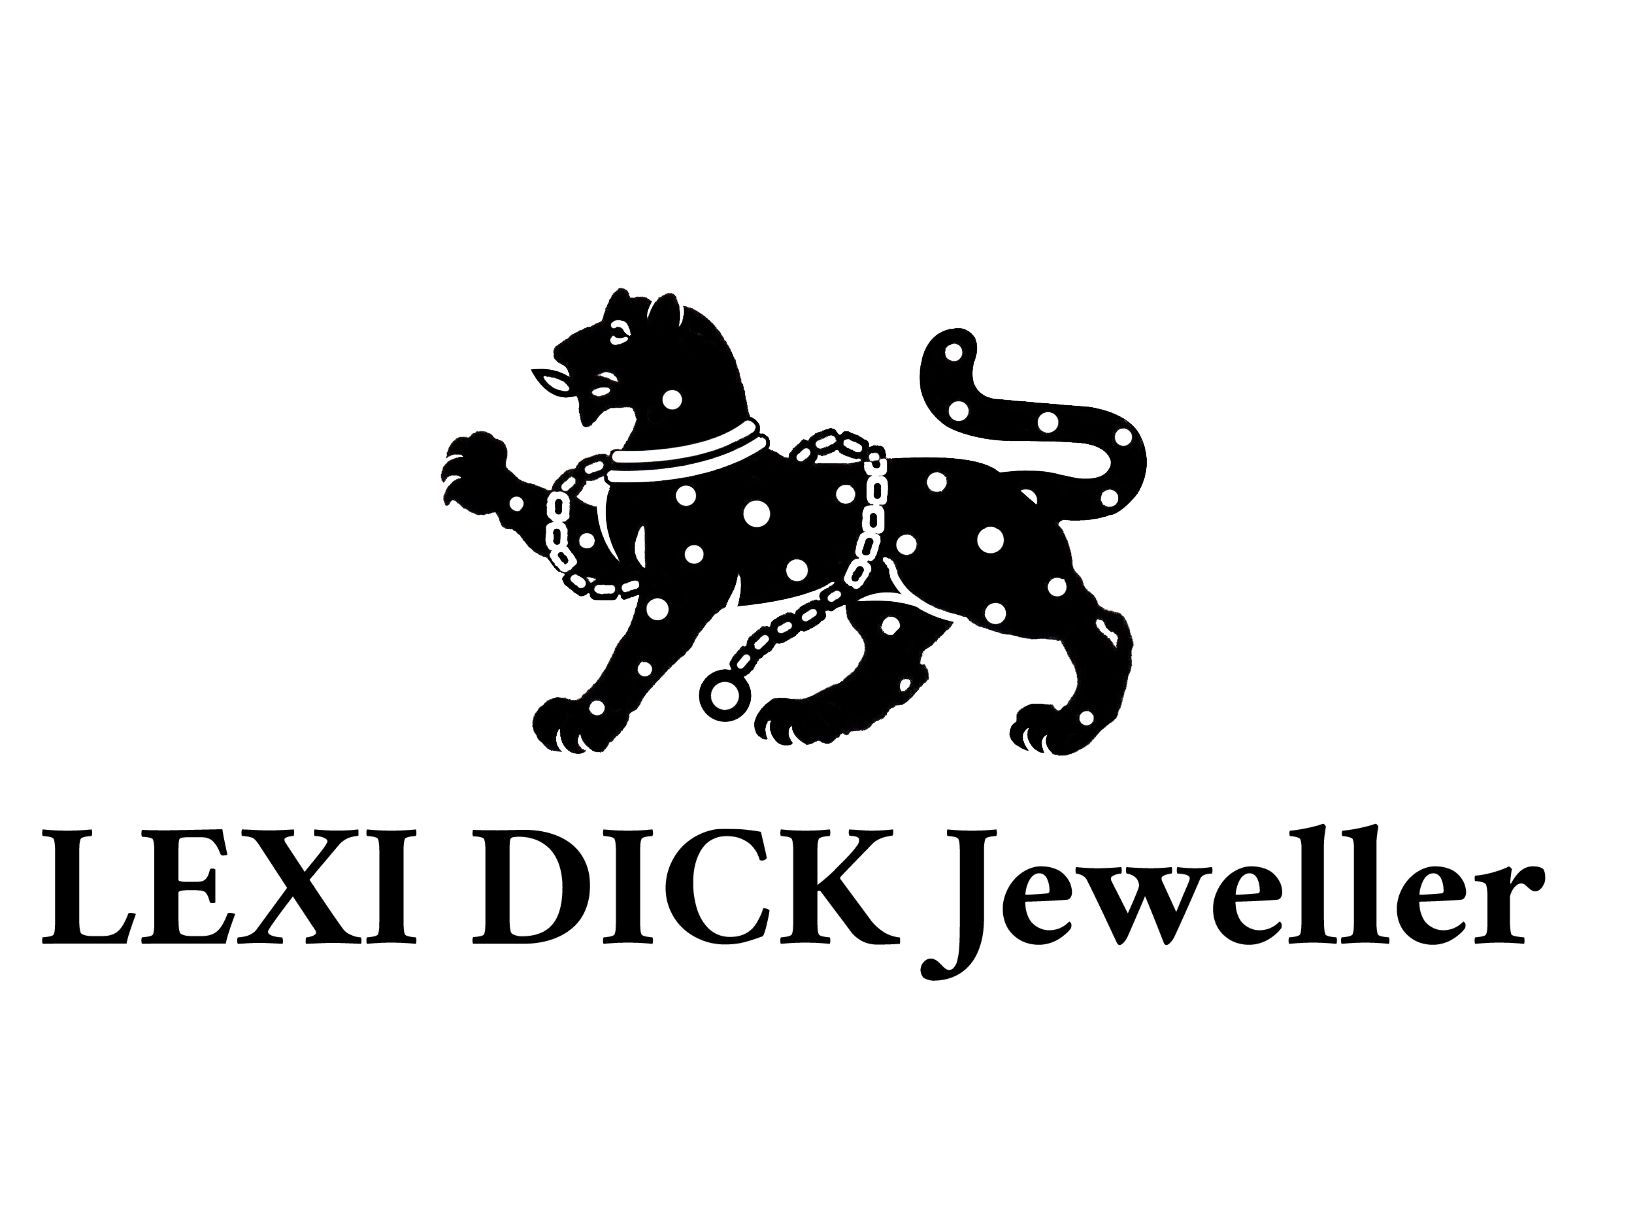 Lexi Dick Jeweller brand logo